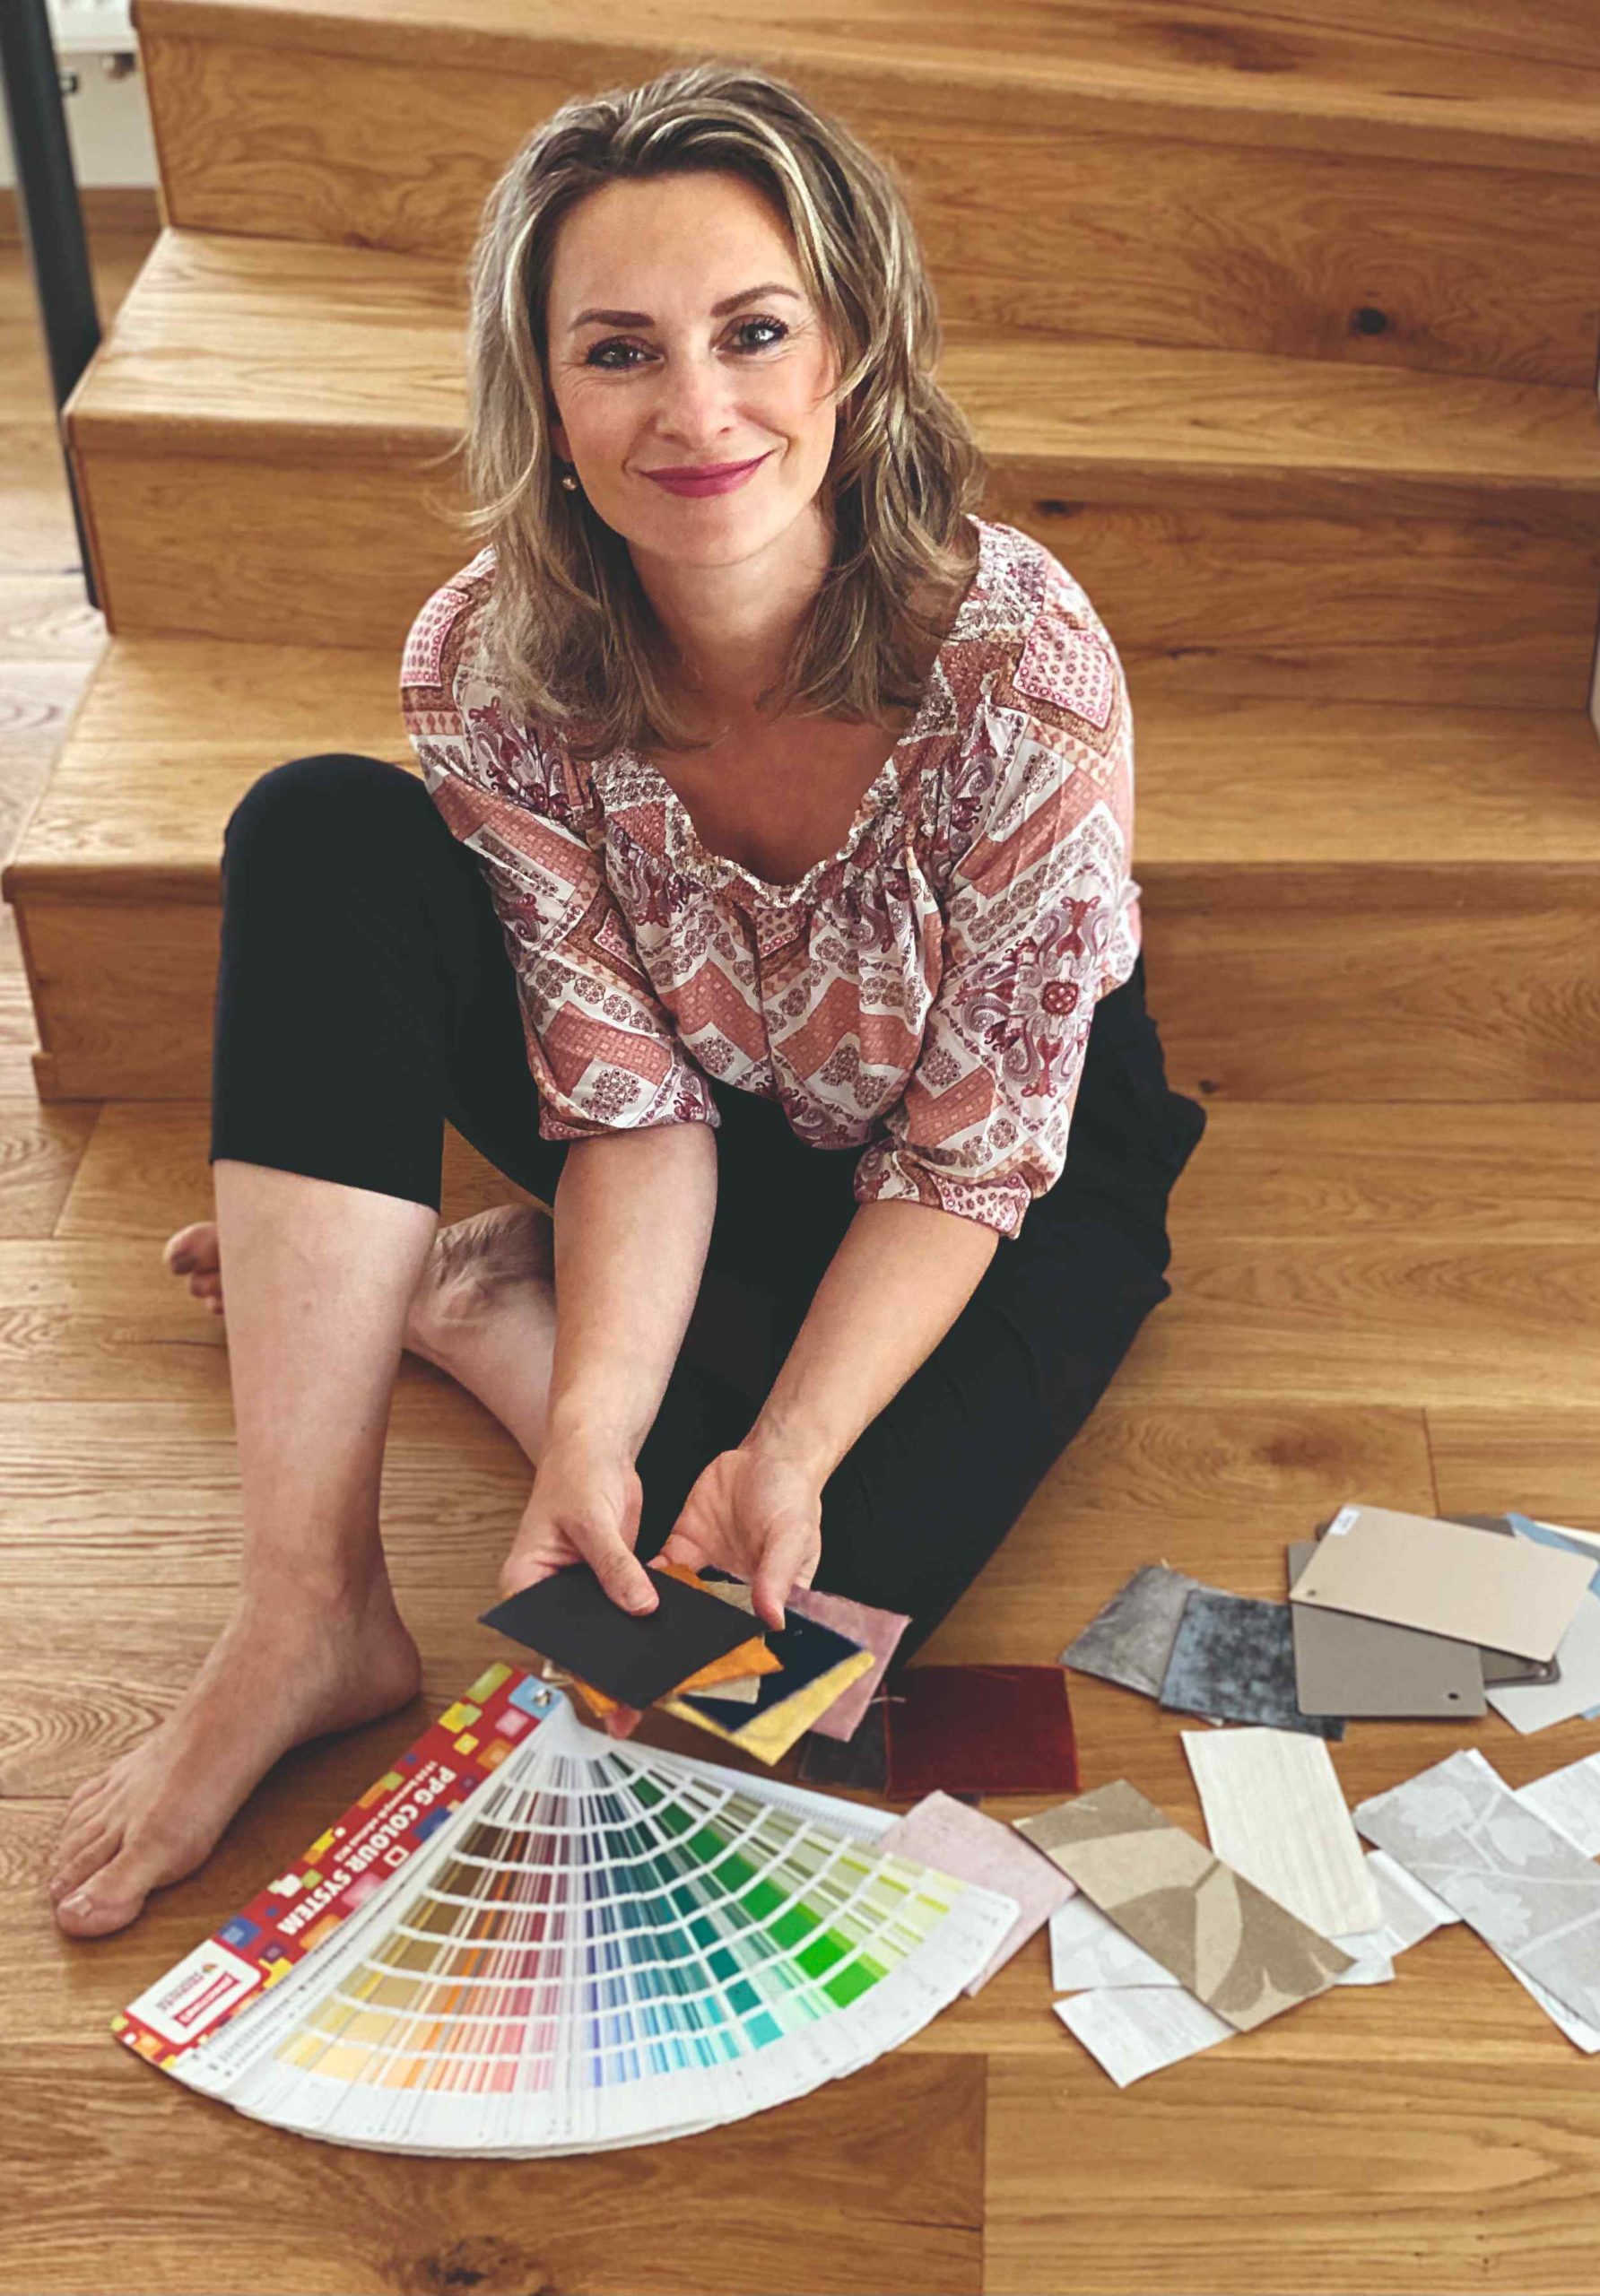 Žena se vzorkovníkem barev v ruce